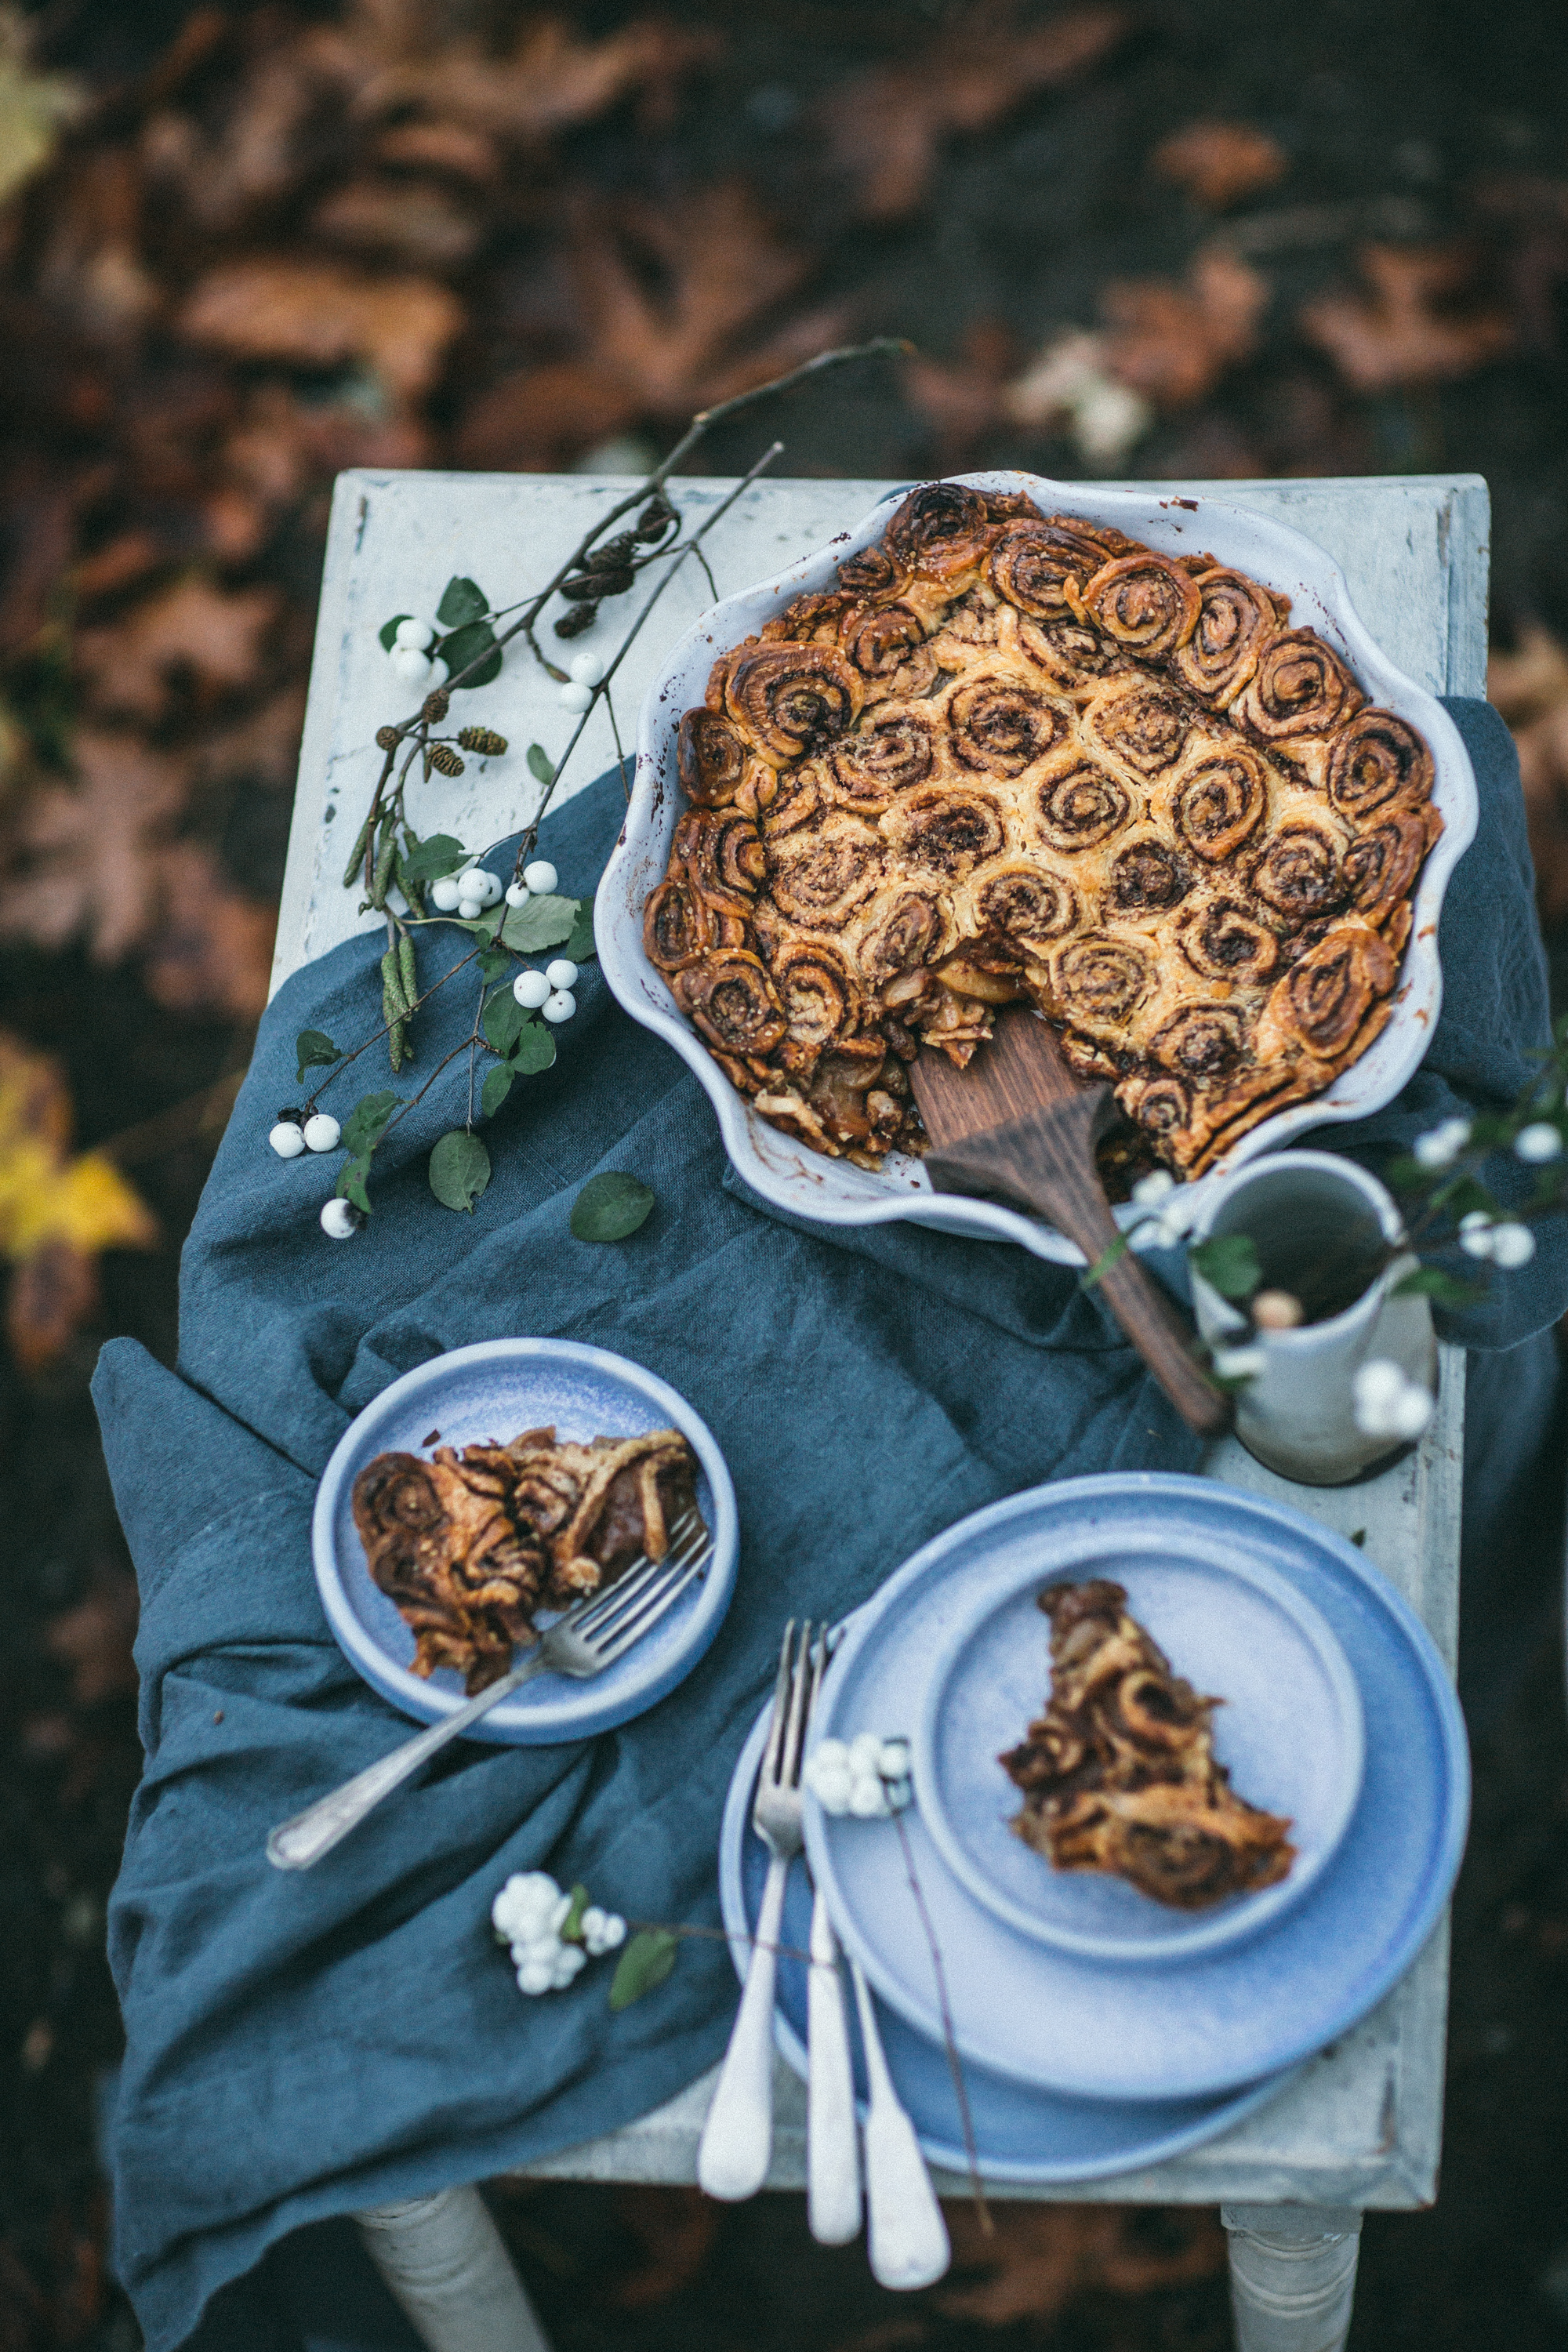 Cinnamon Roll Apple Pie from Lomelino's Pies by Eva Kosmas Flores and Tiffany of Oh Honey Bakes